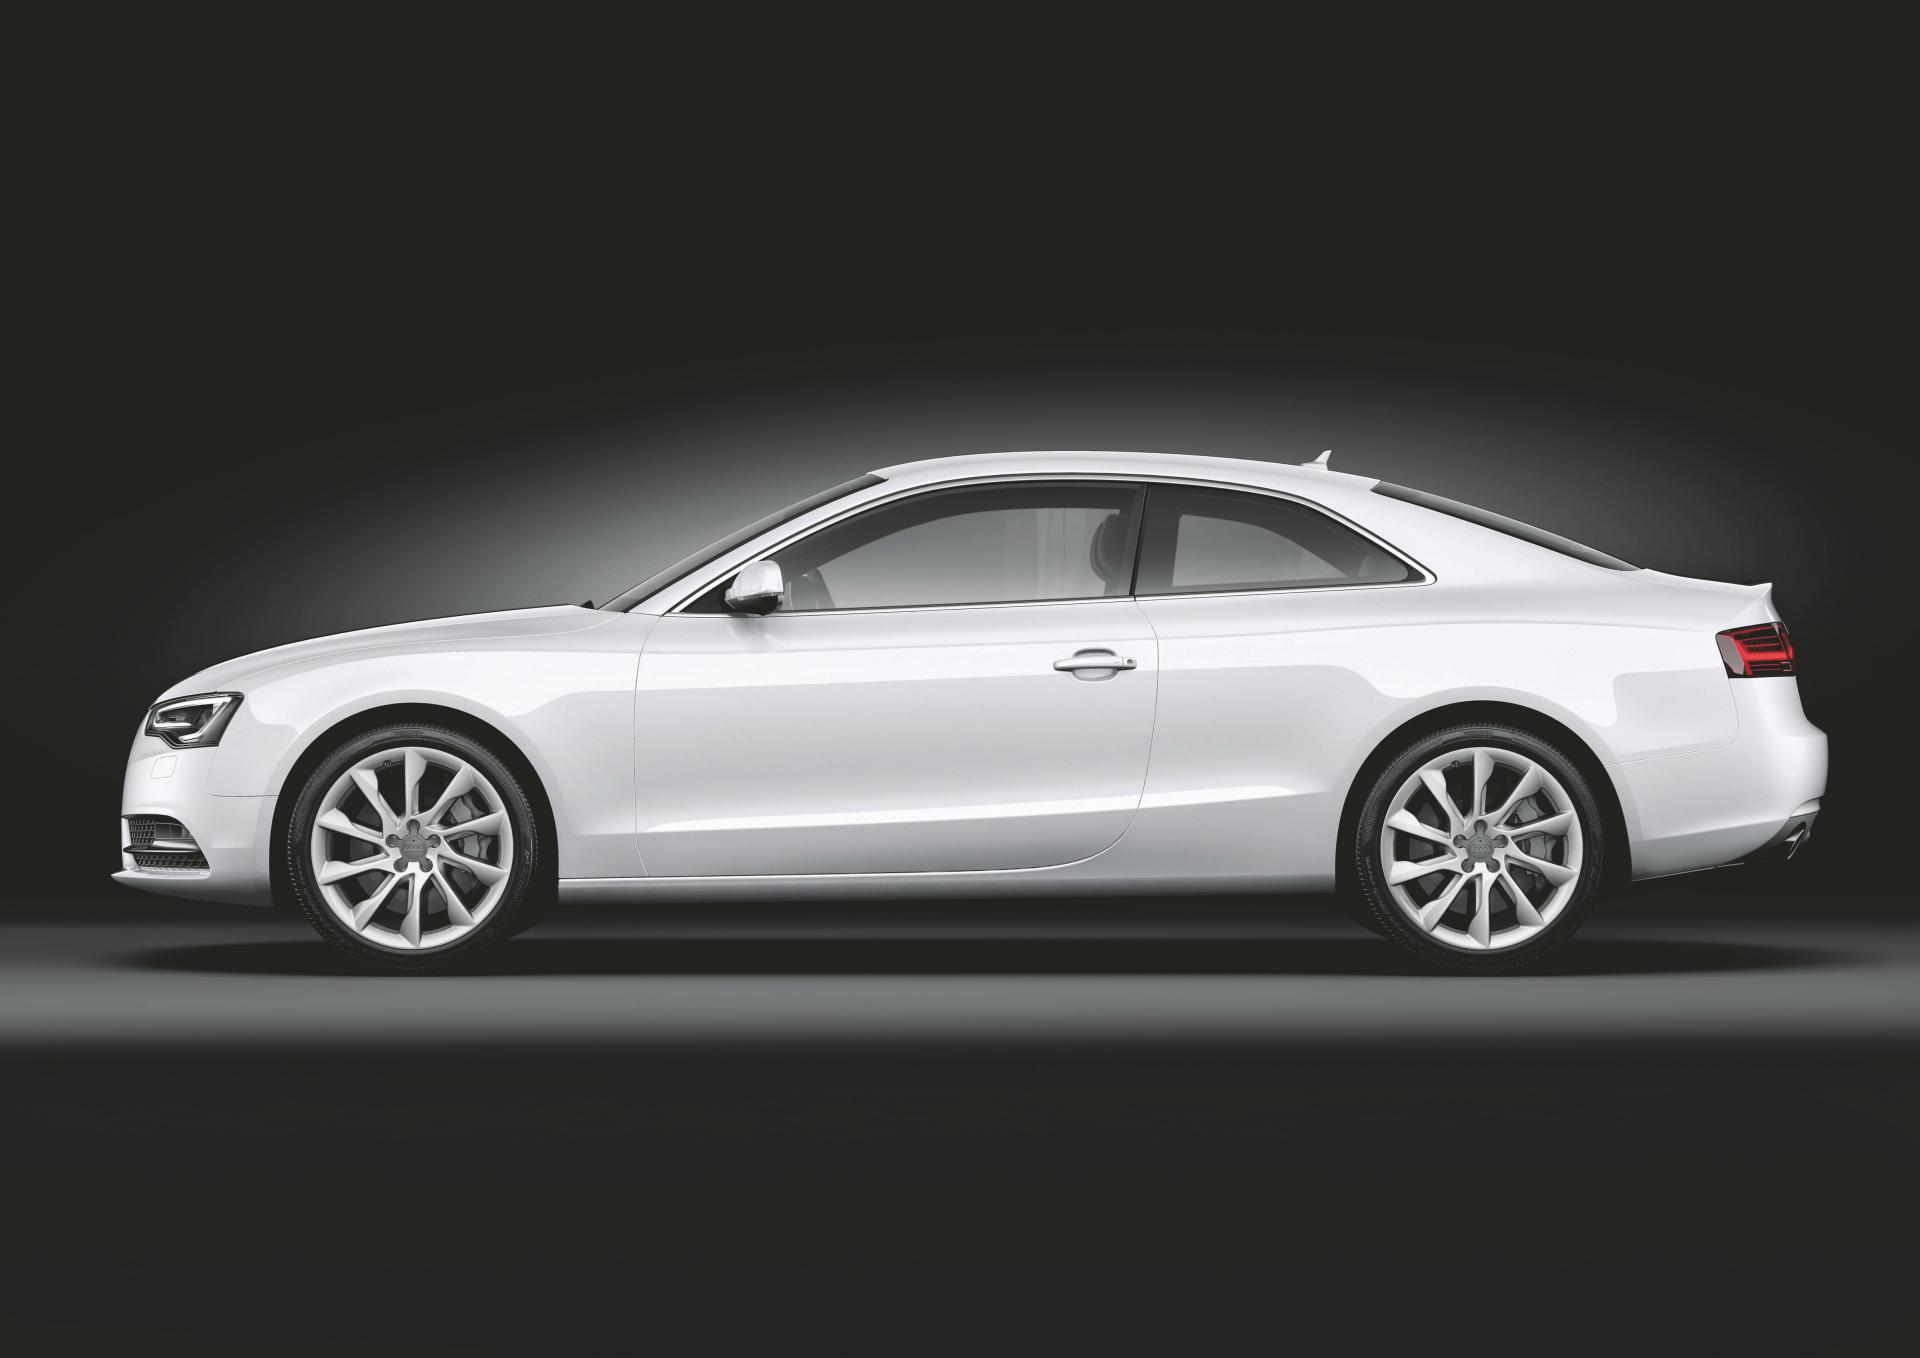 2012 Audi A5 News and Information - conceptcarz.com